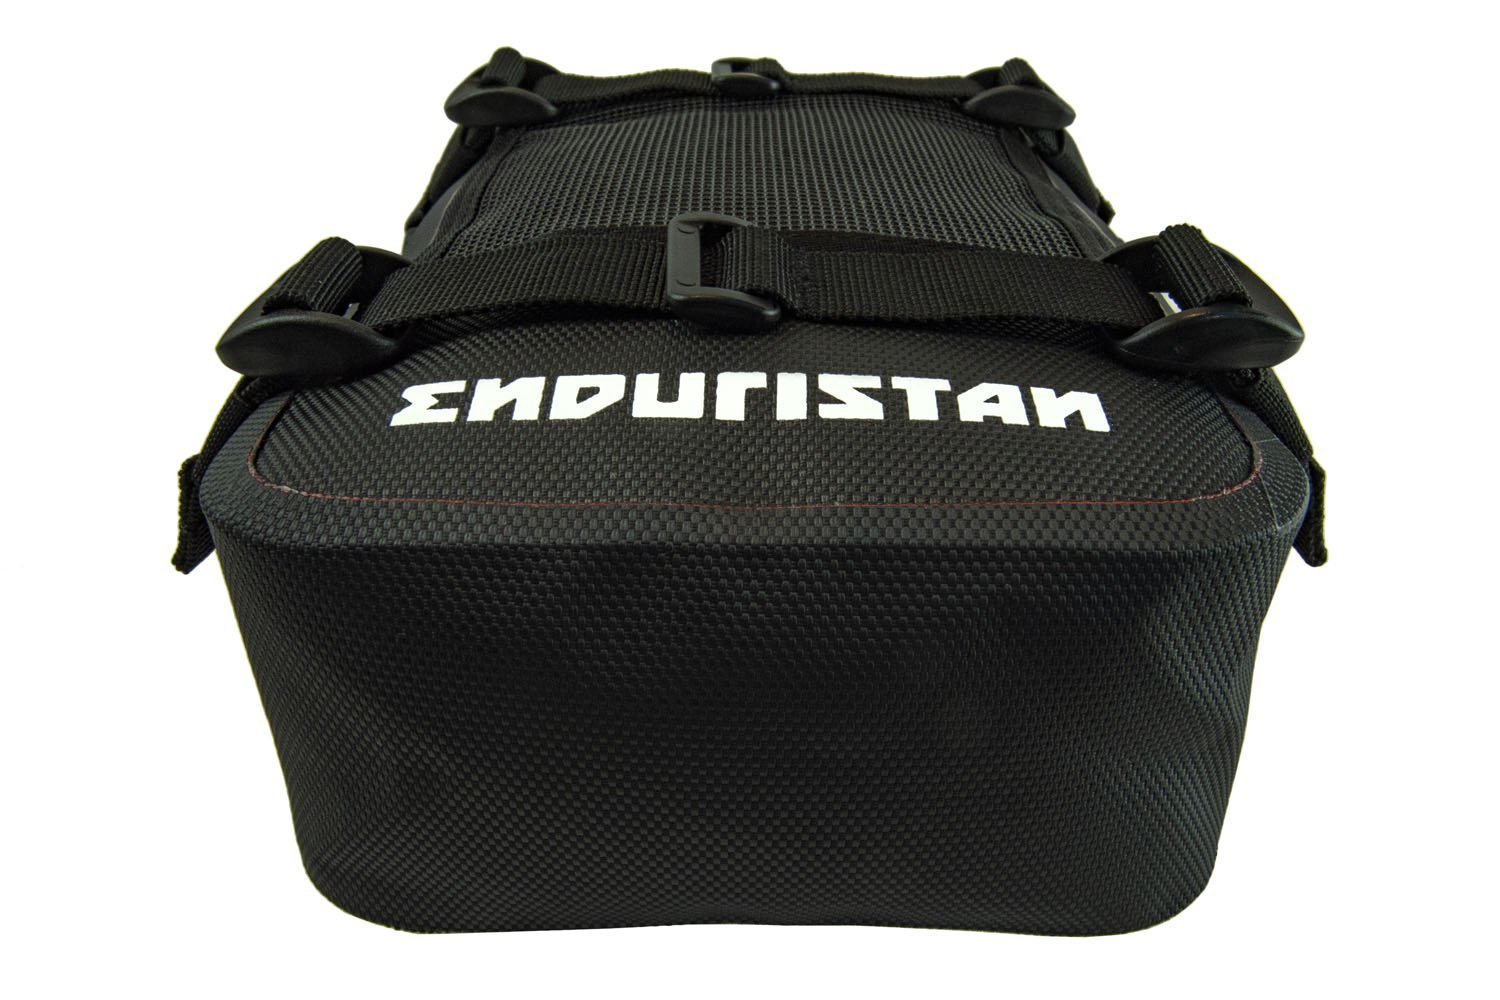 Enduristan Tail Pack - Small - bigbadbikes.com™